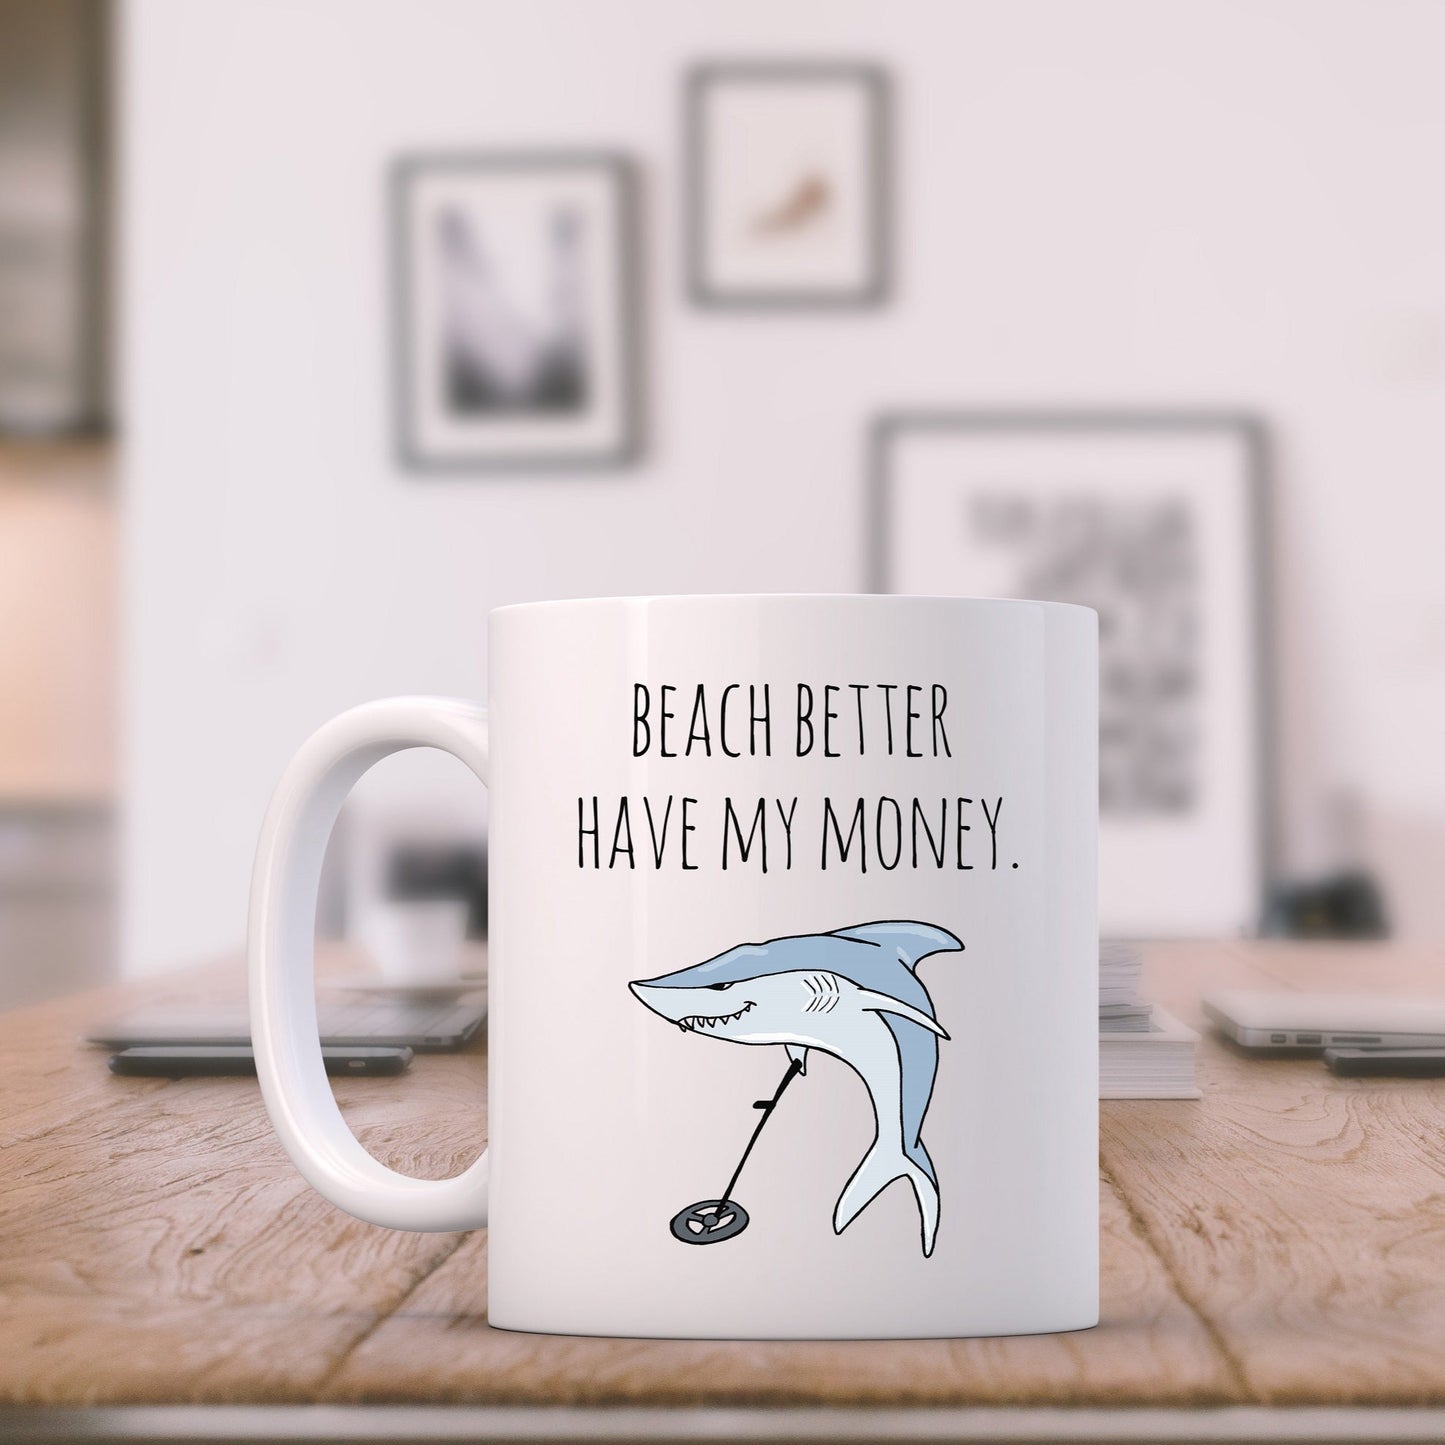 SALE - Beach Better Have My Money - 11oz Ceramic Mug